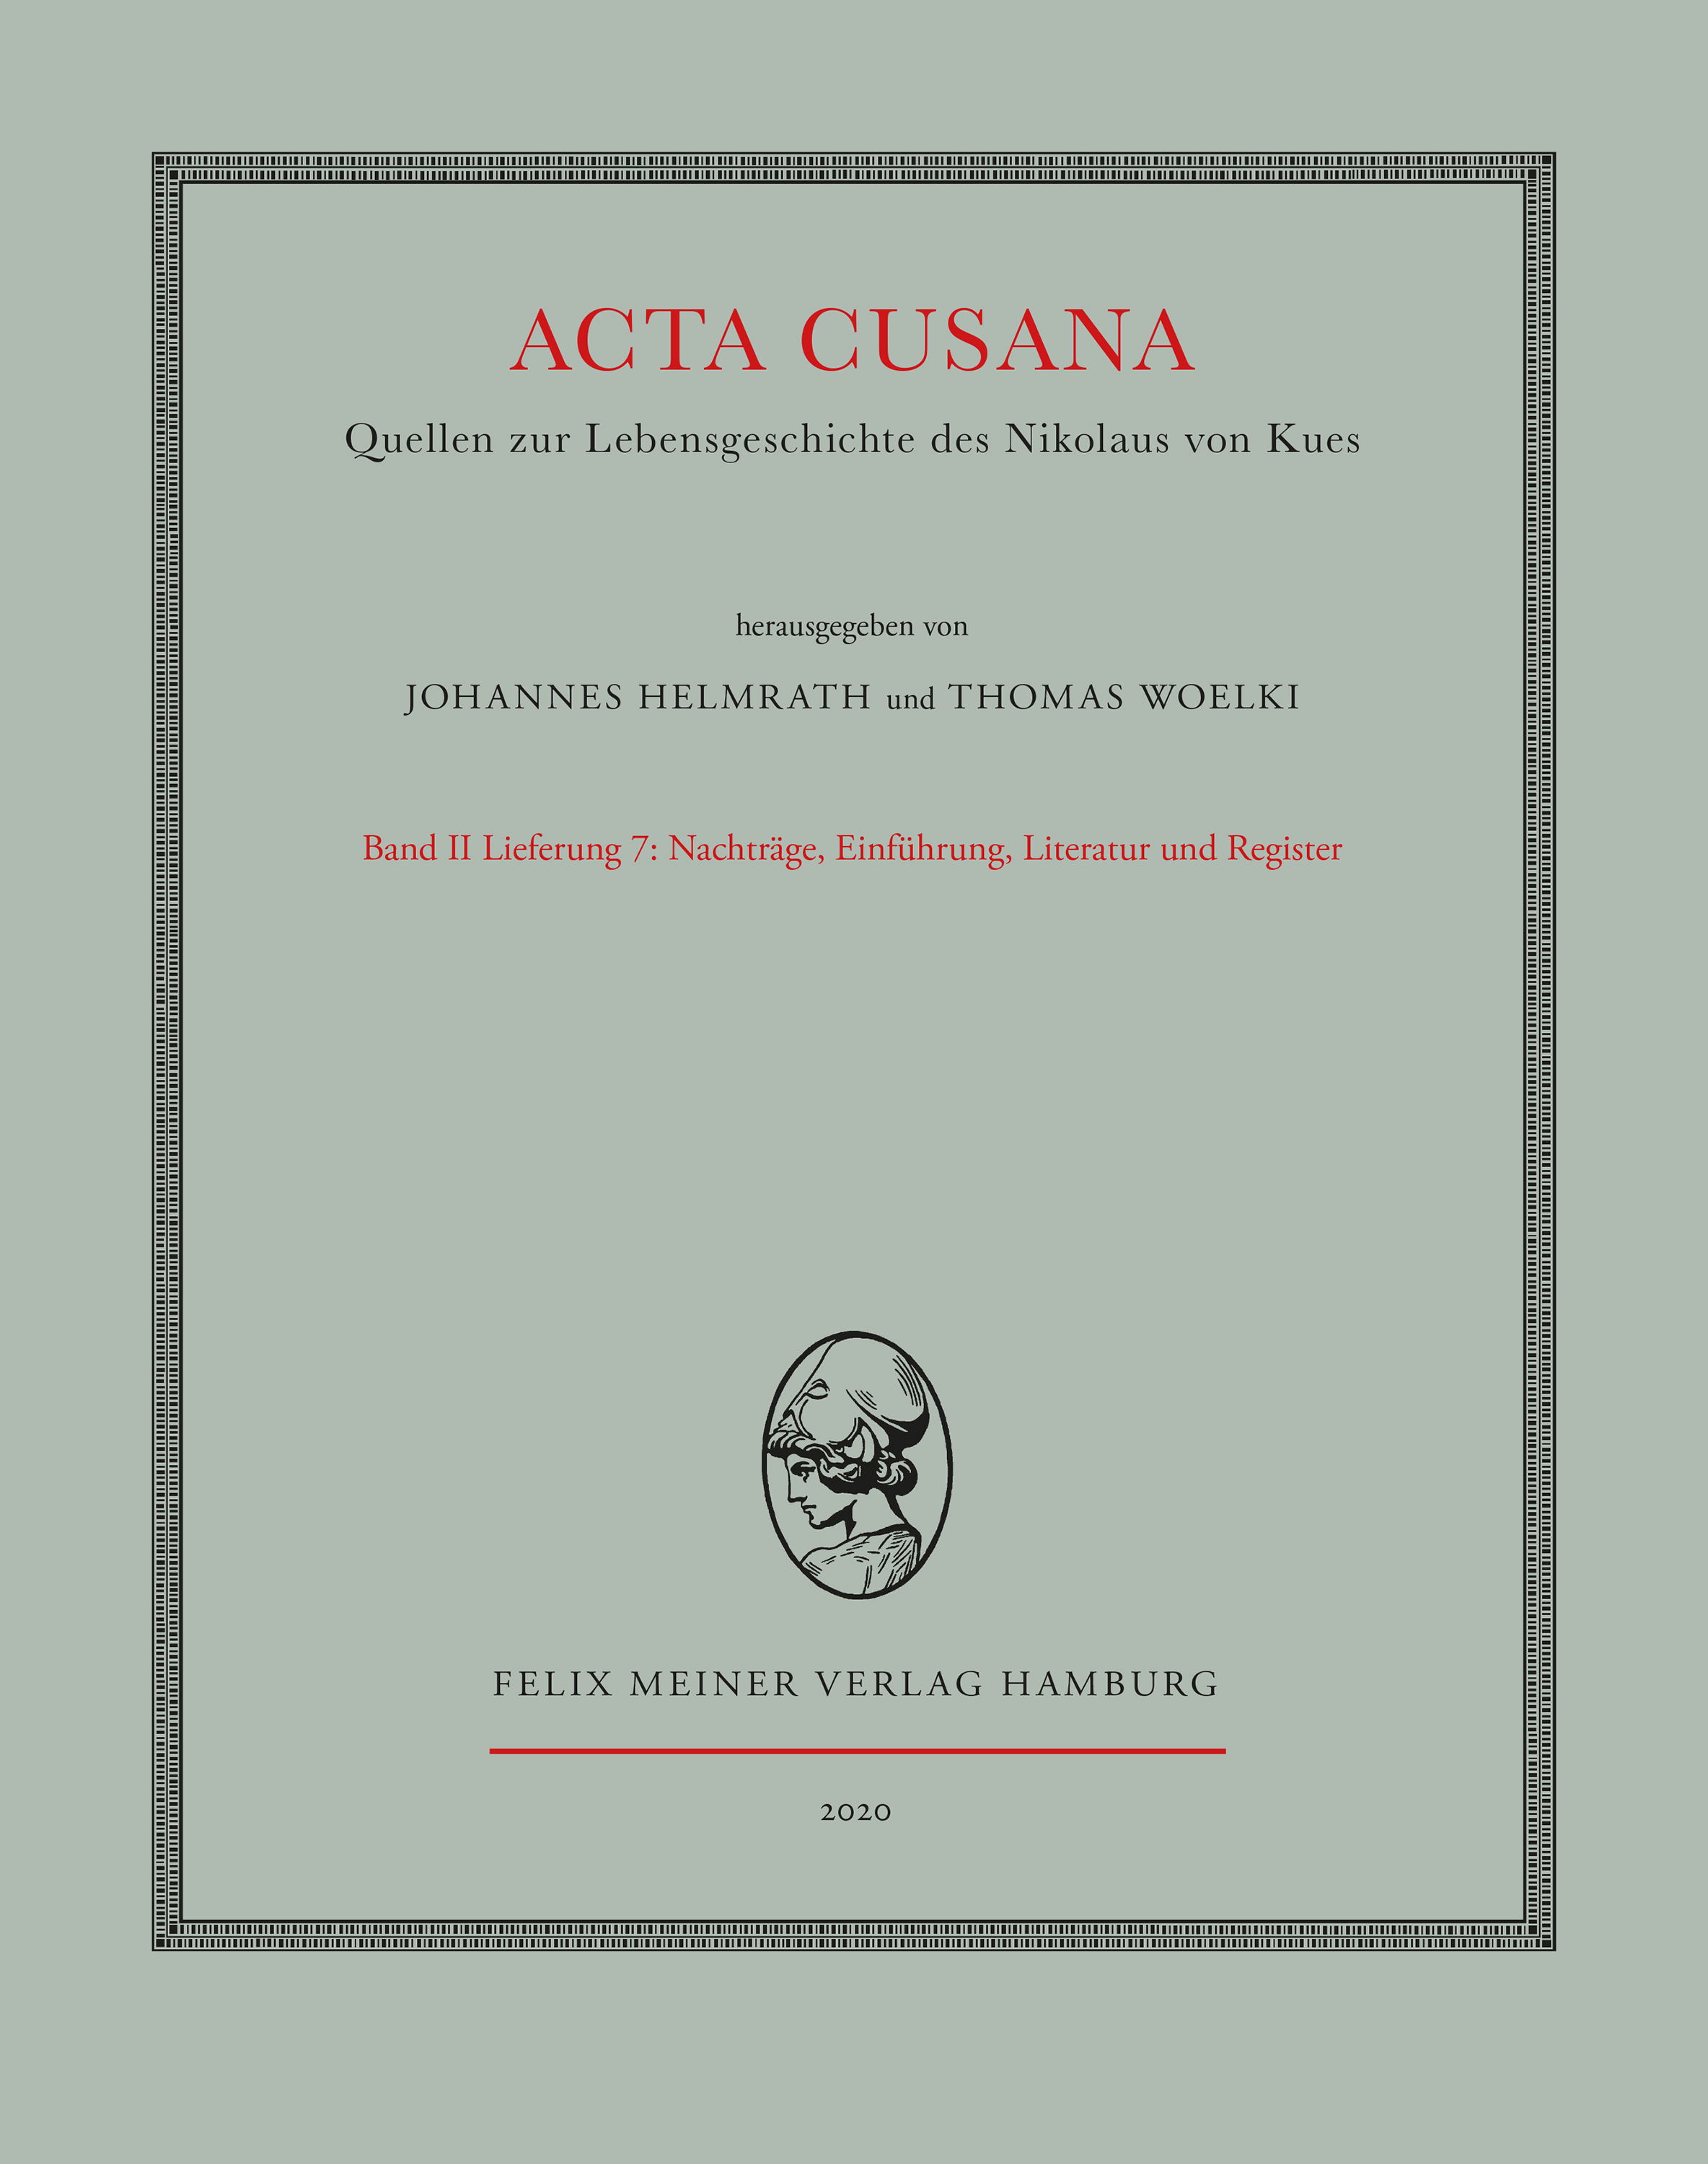 Acta Cusana, Band II, Lieferung 7